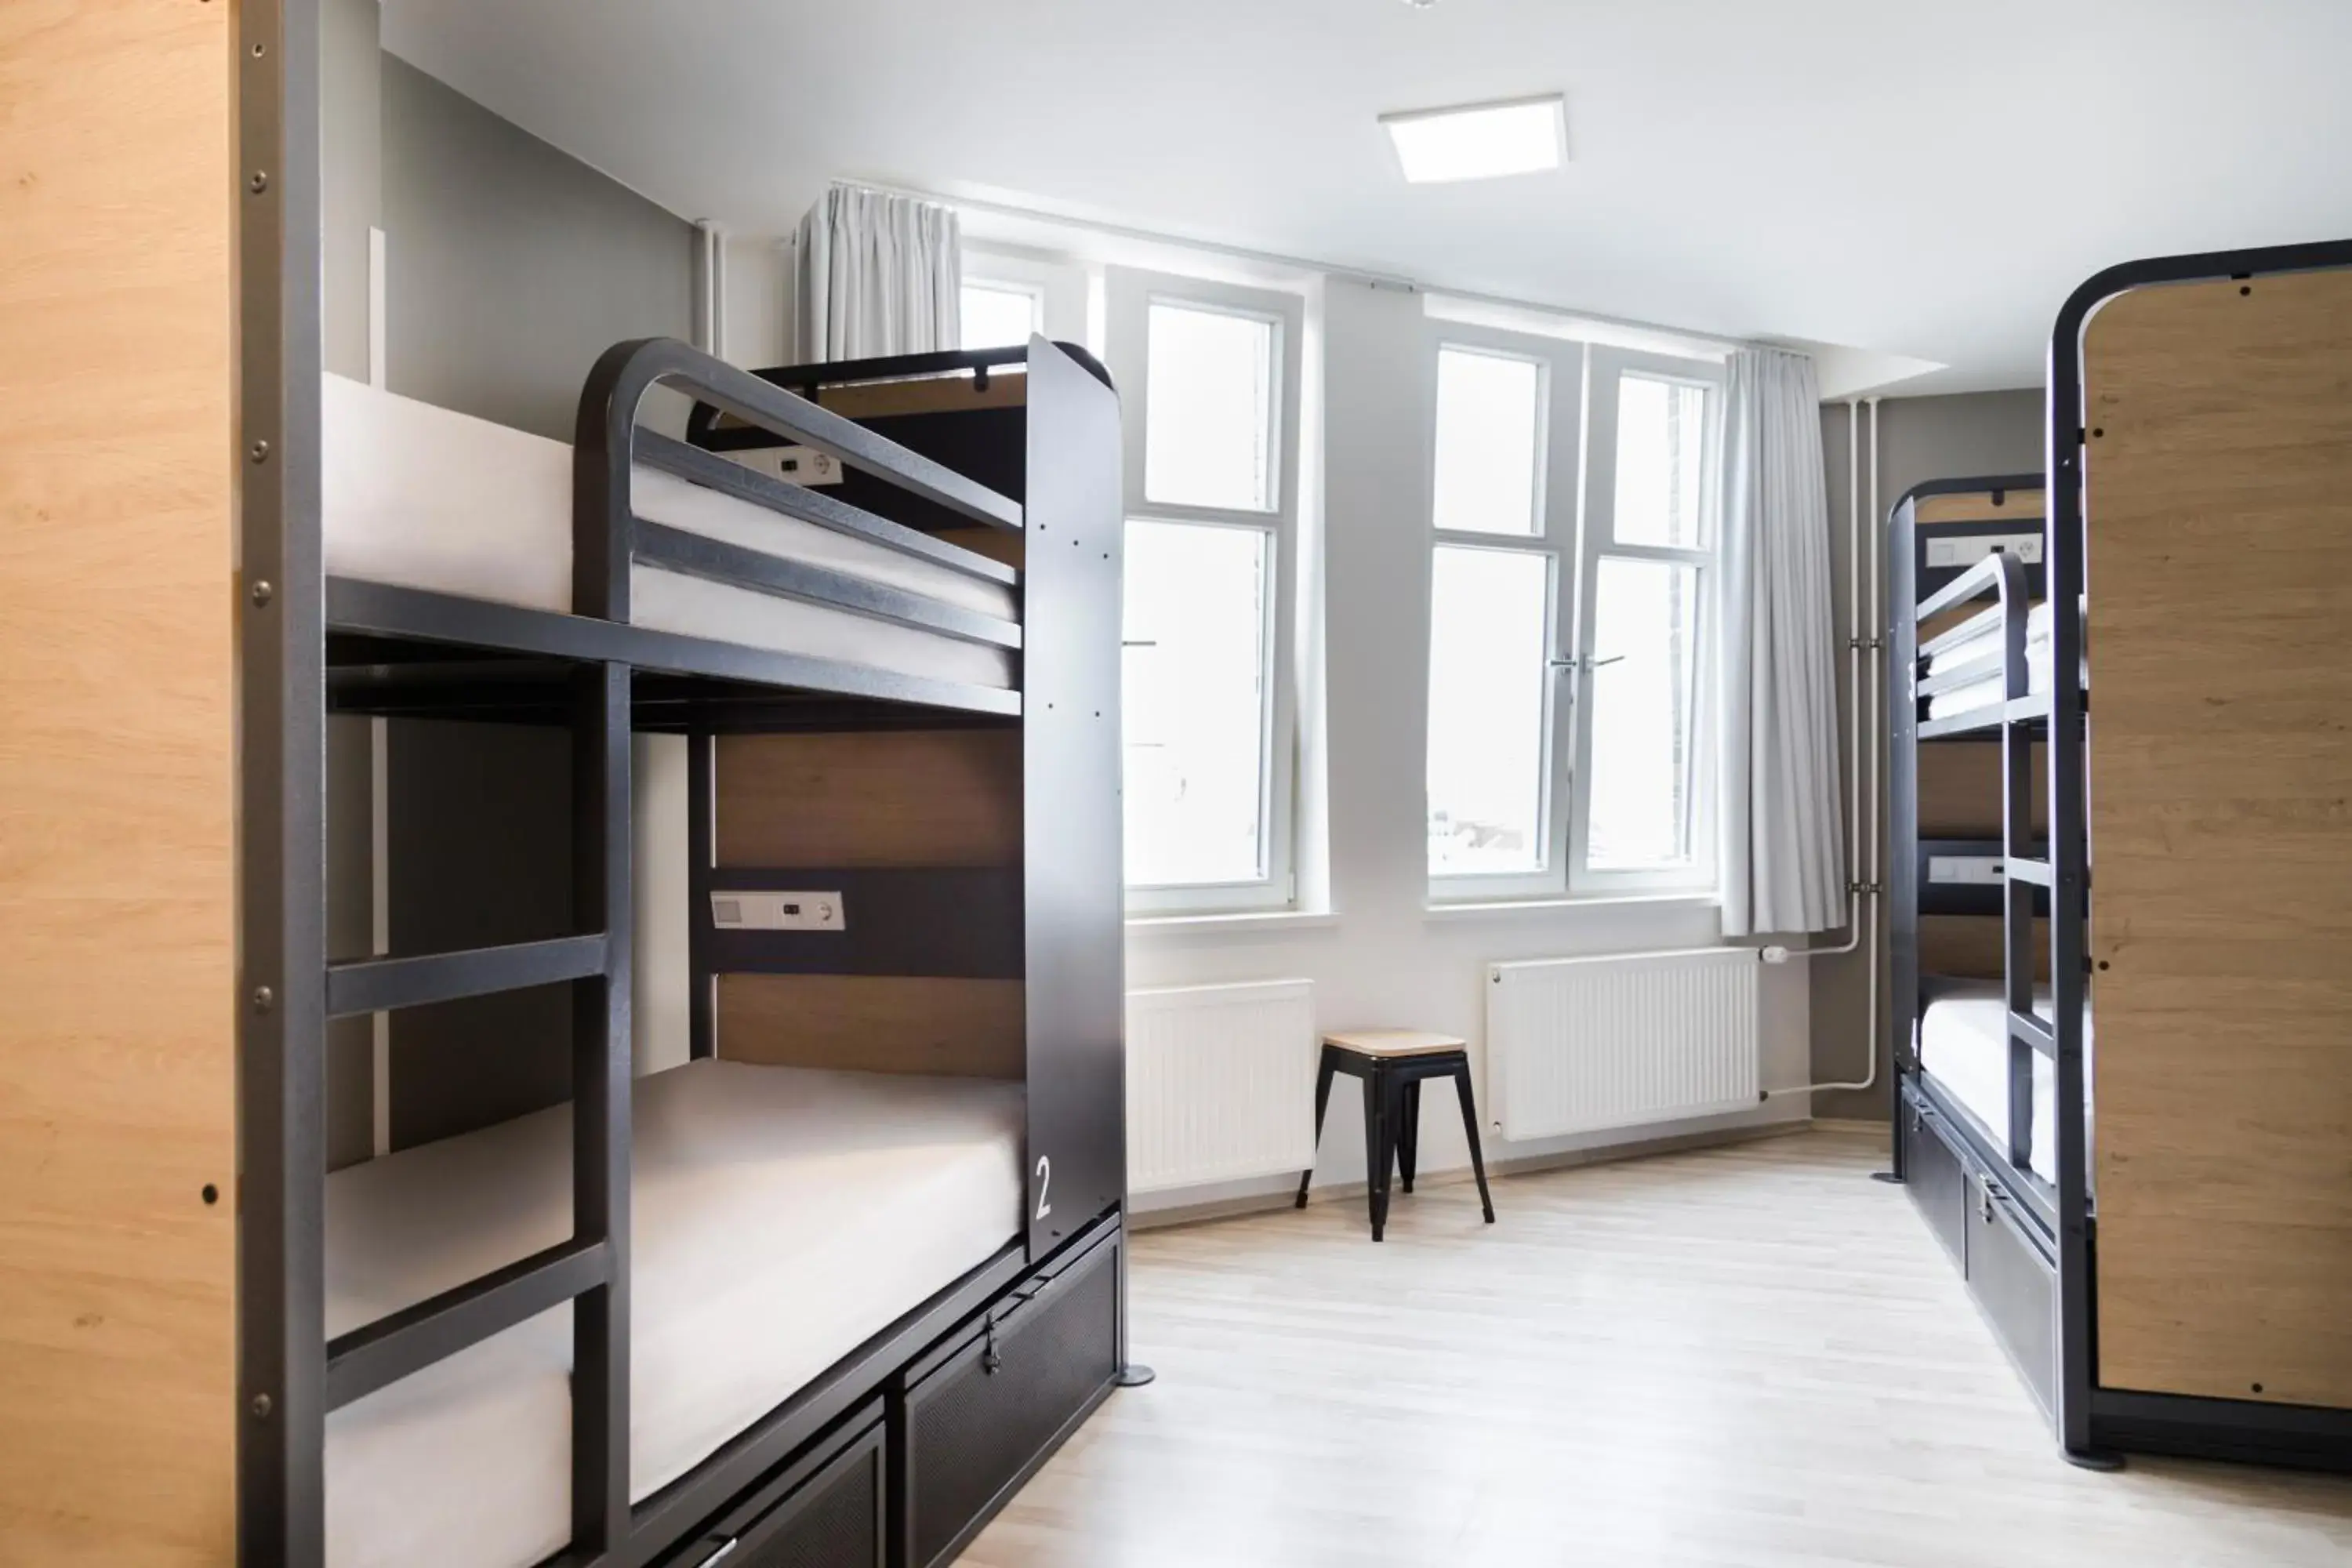 Bed in 4-Bed Dormitory Room in Generator Hamburg